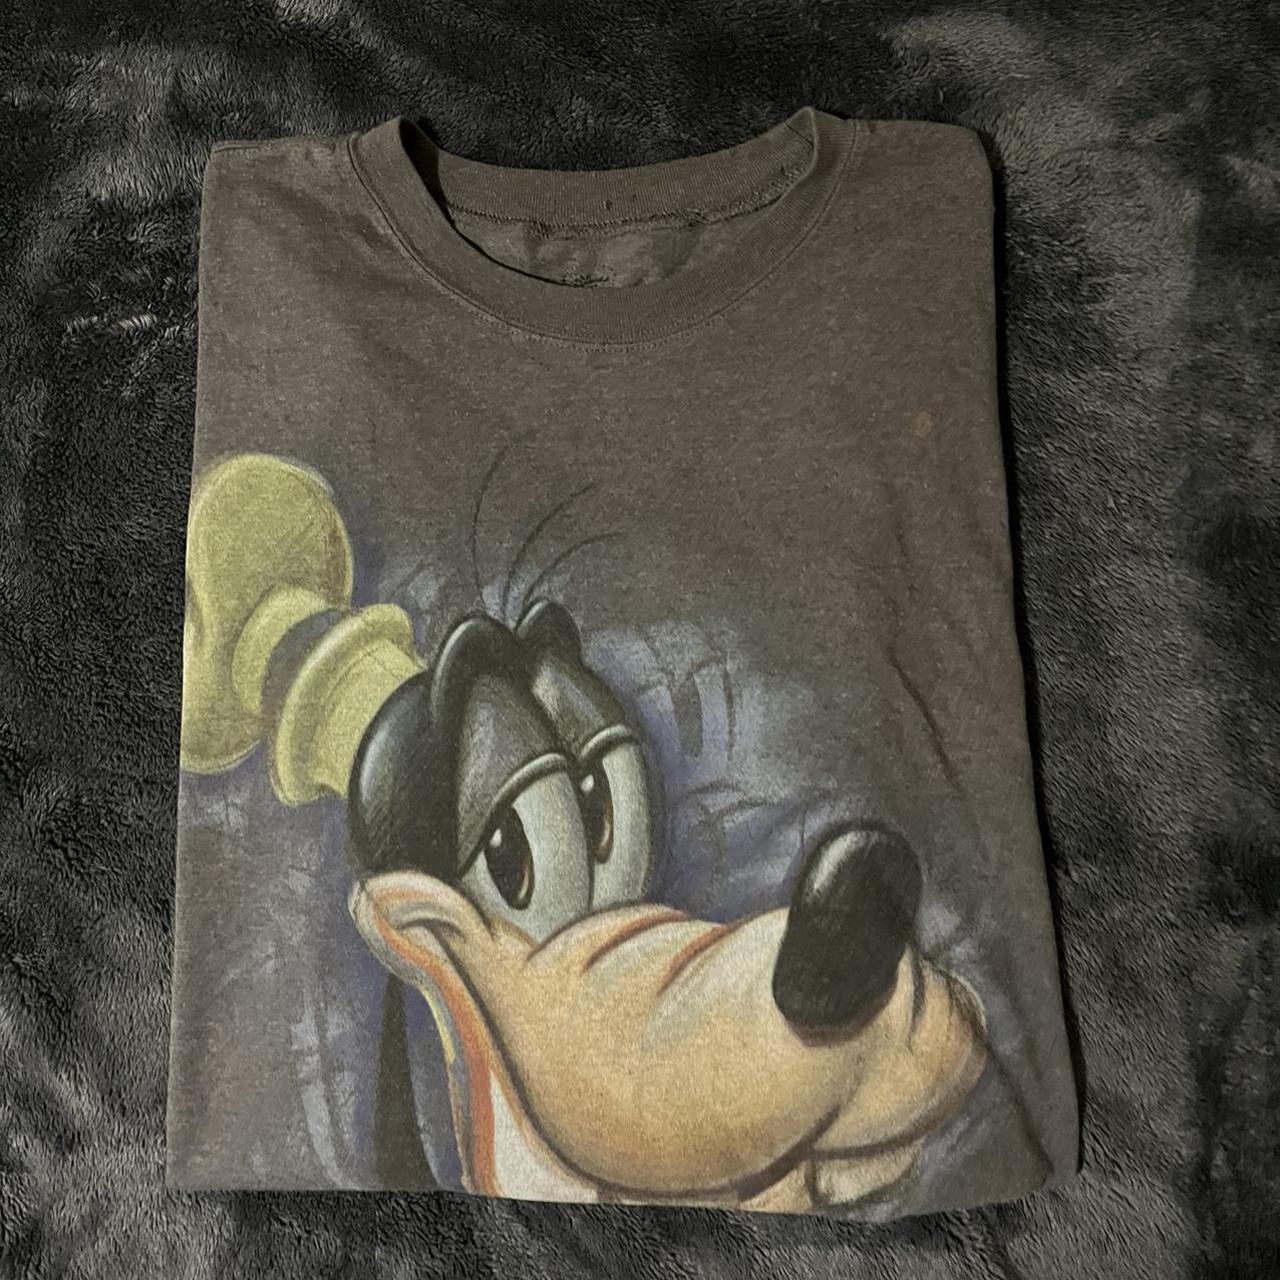 Airbrush Disney Shirt Design